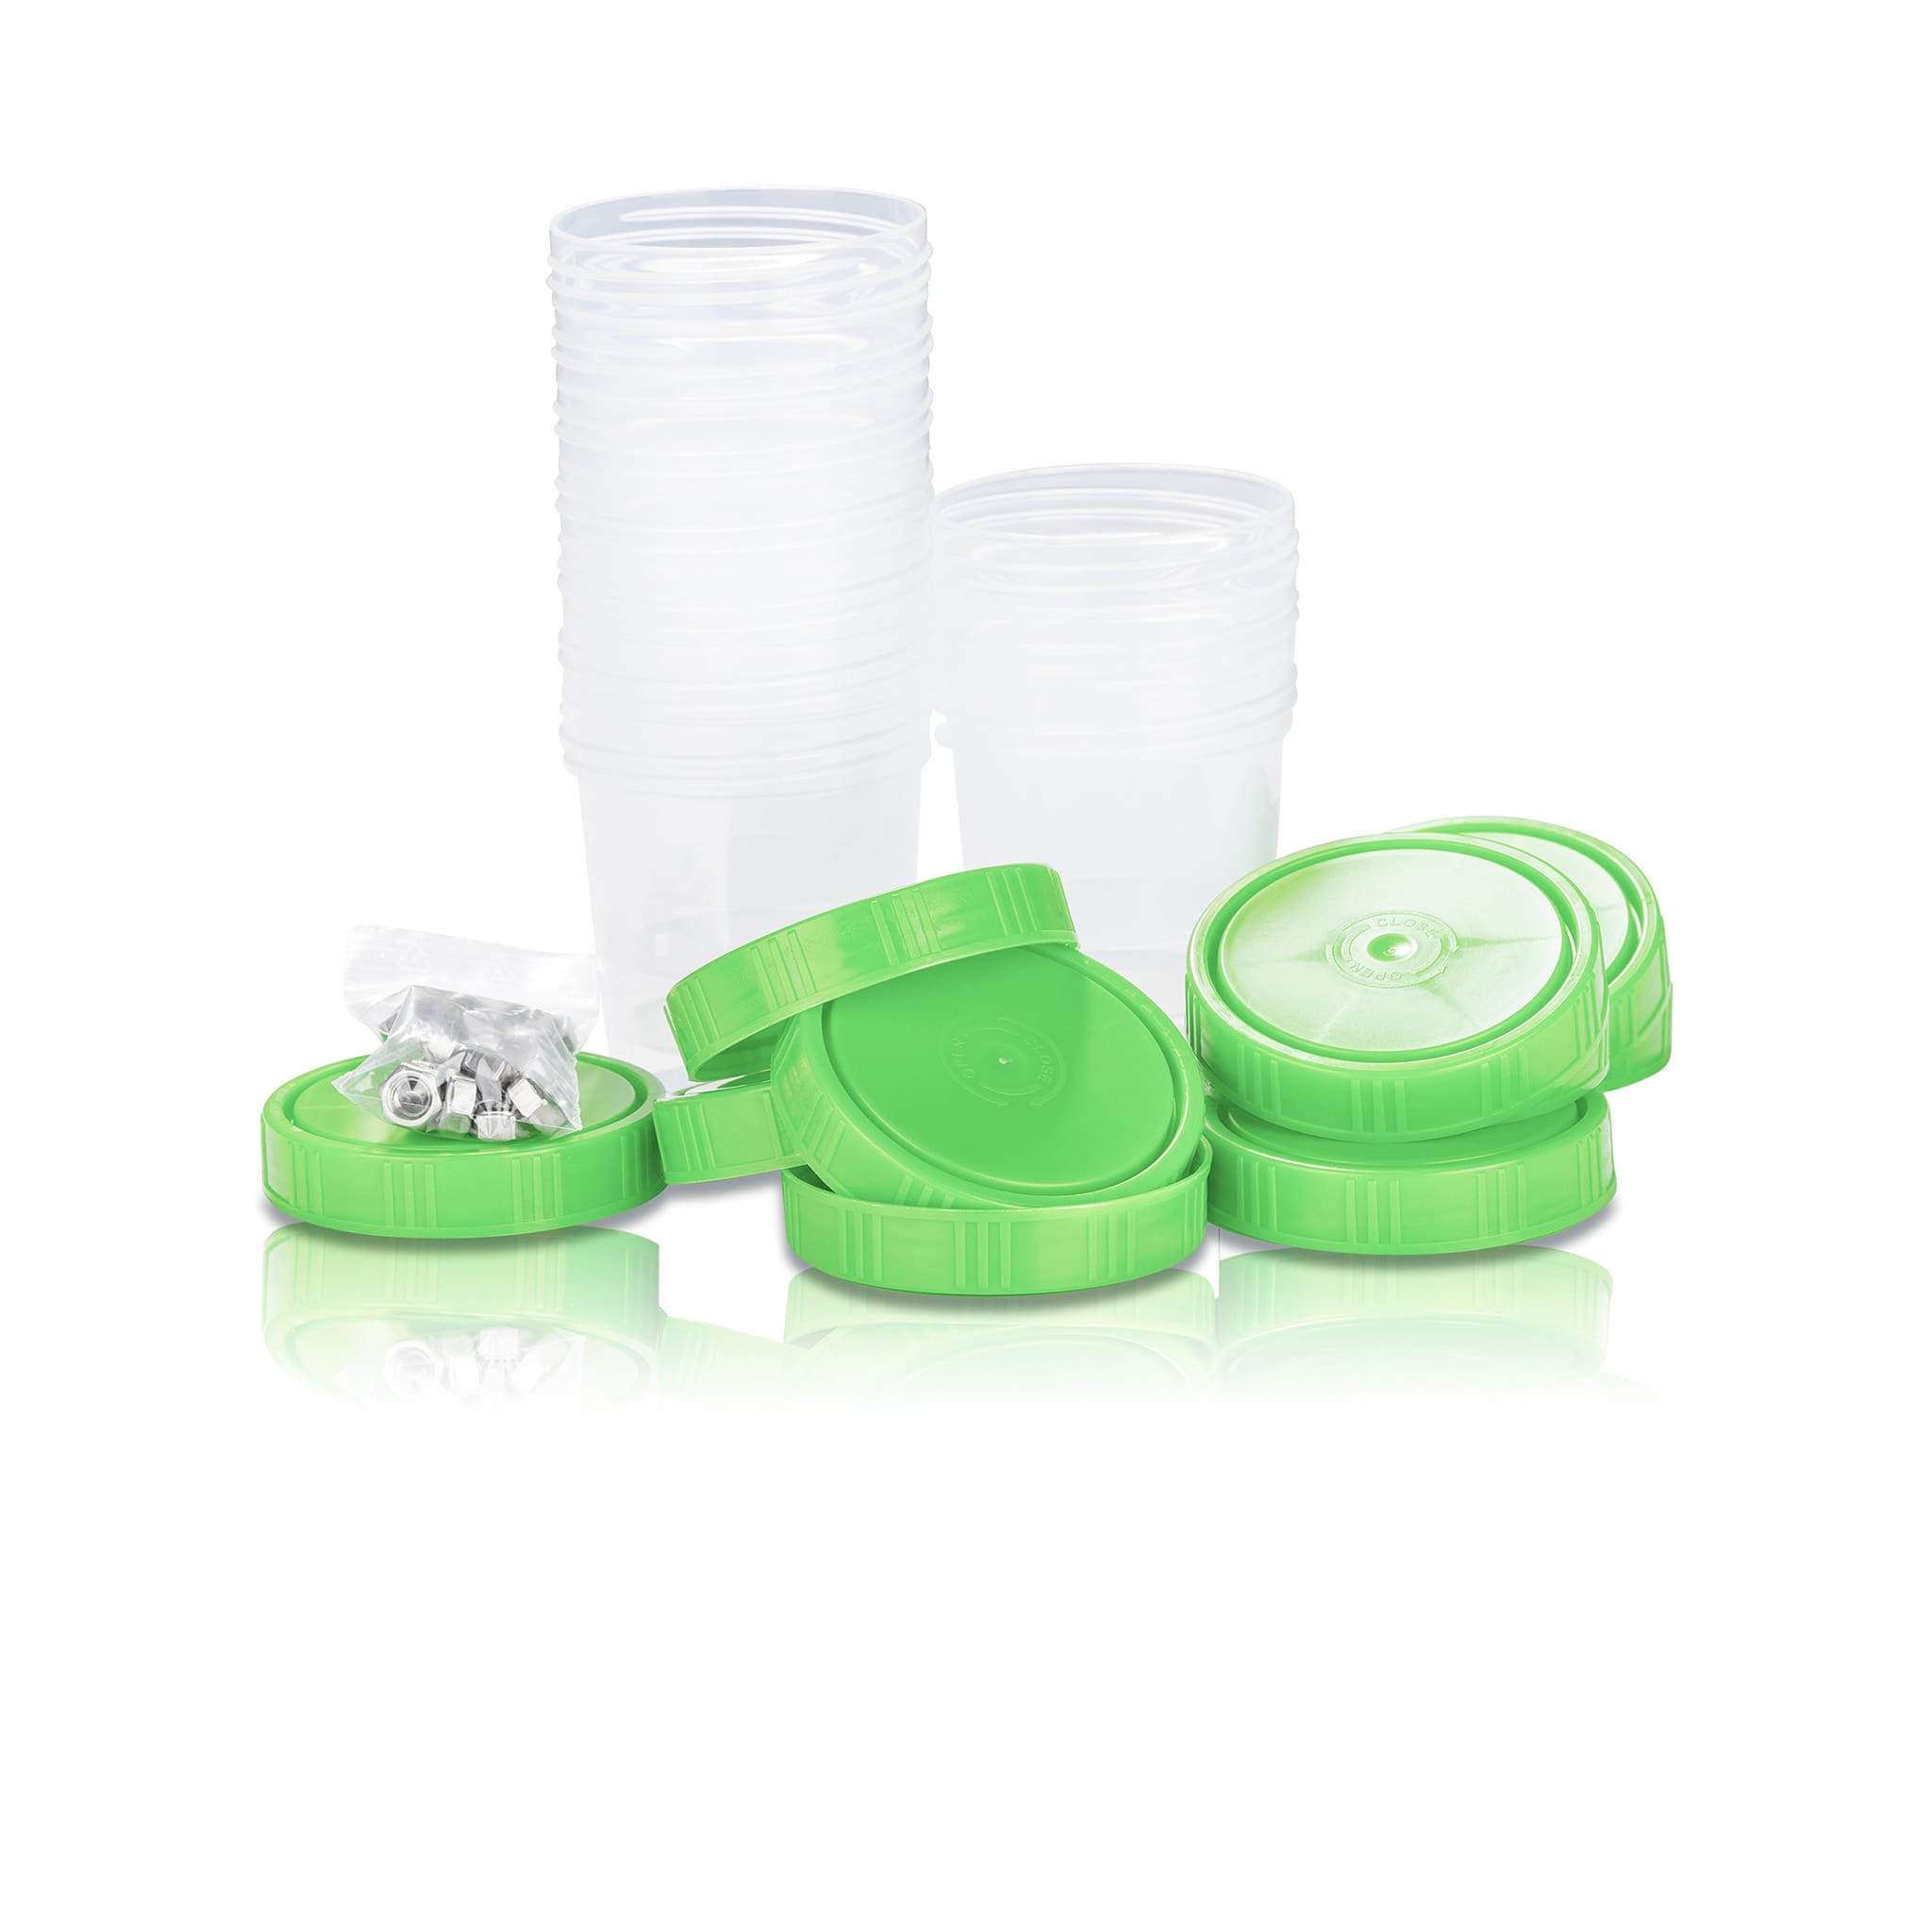 Plastic Beaker 100 ml with green lid - pack of 10